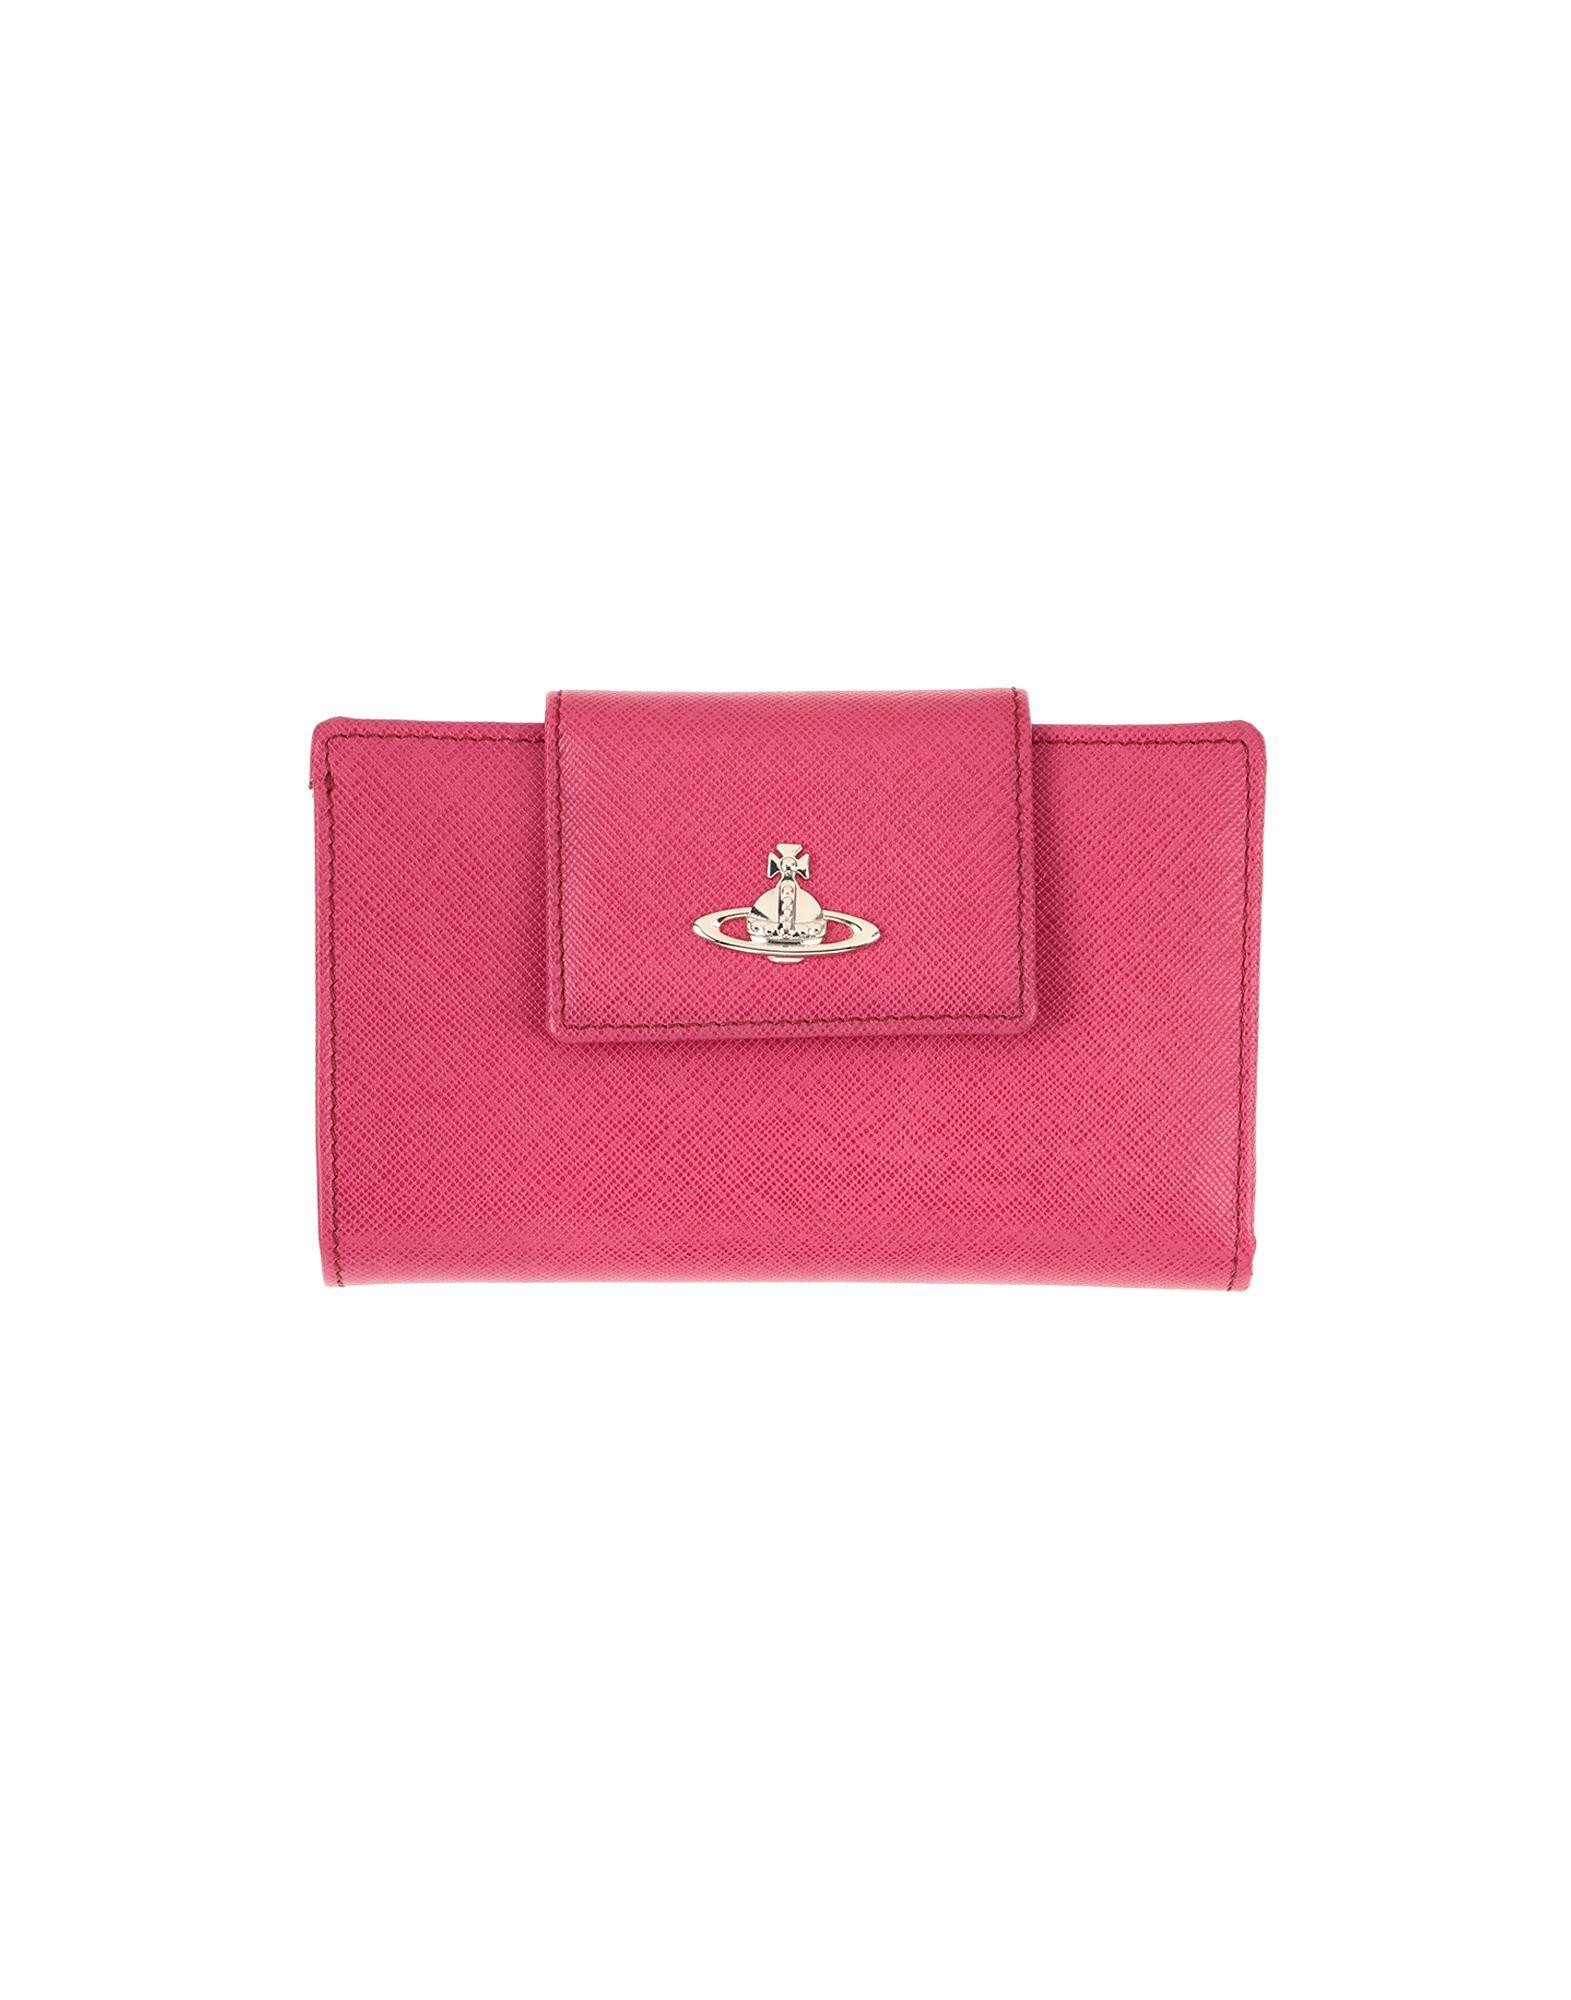 Vivienne Westwood Leather Wallet in Fuchsia (Pink) - Lyst